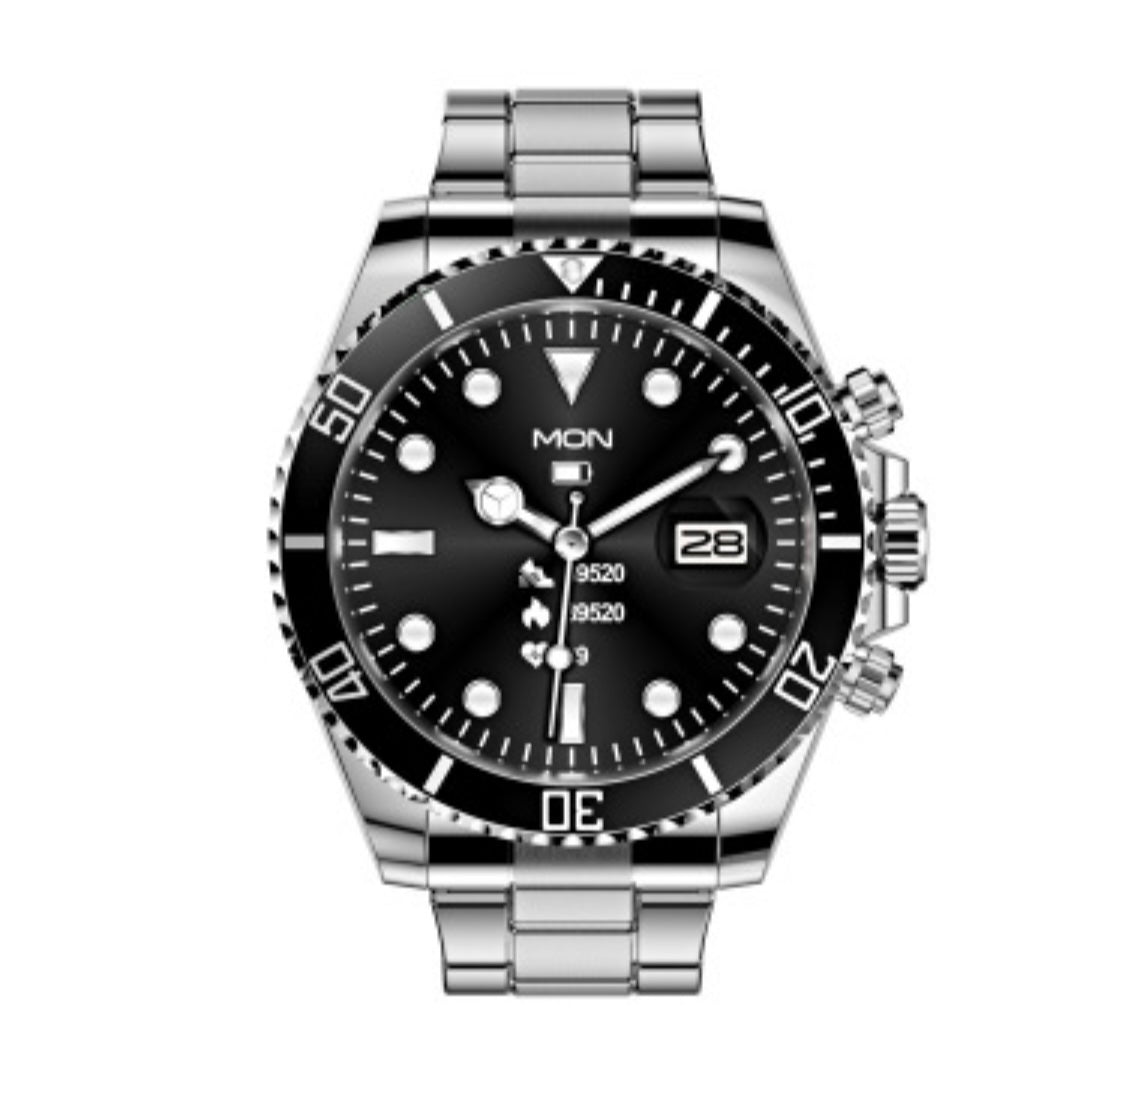 Submariner Style Smart Watch